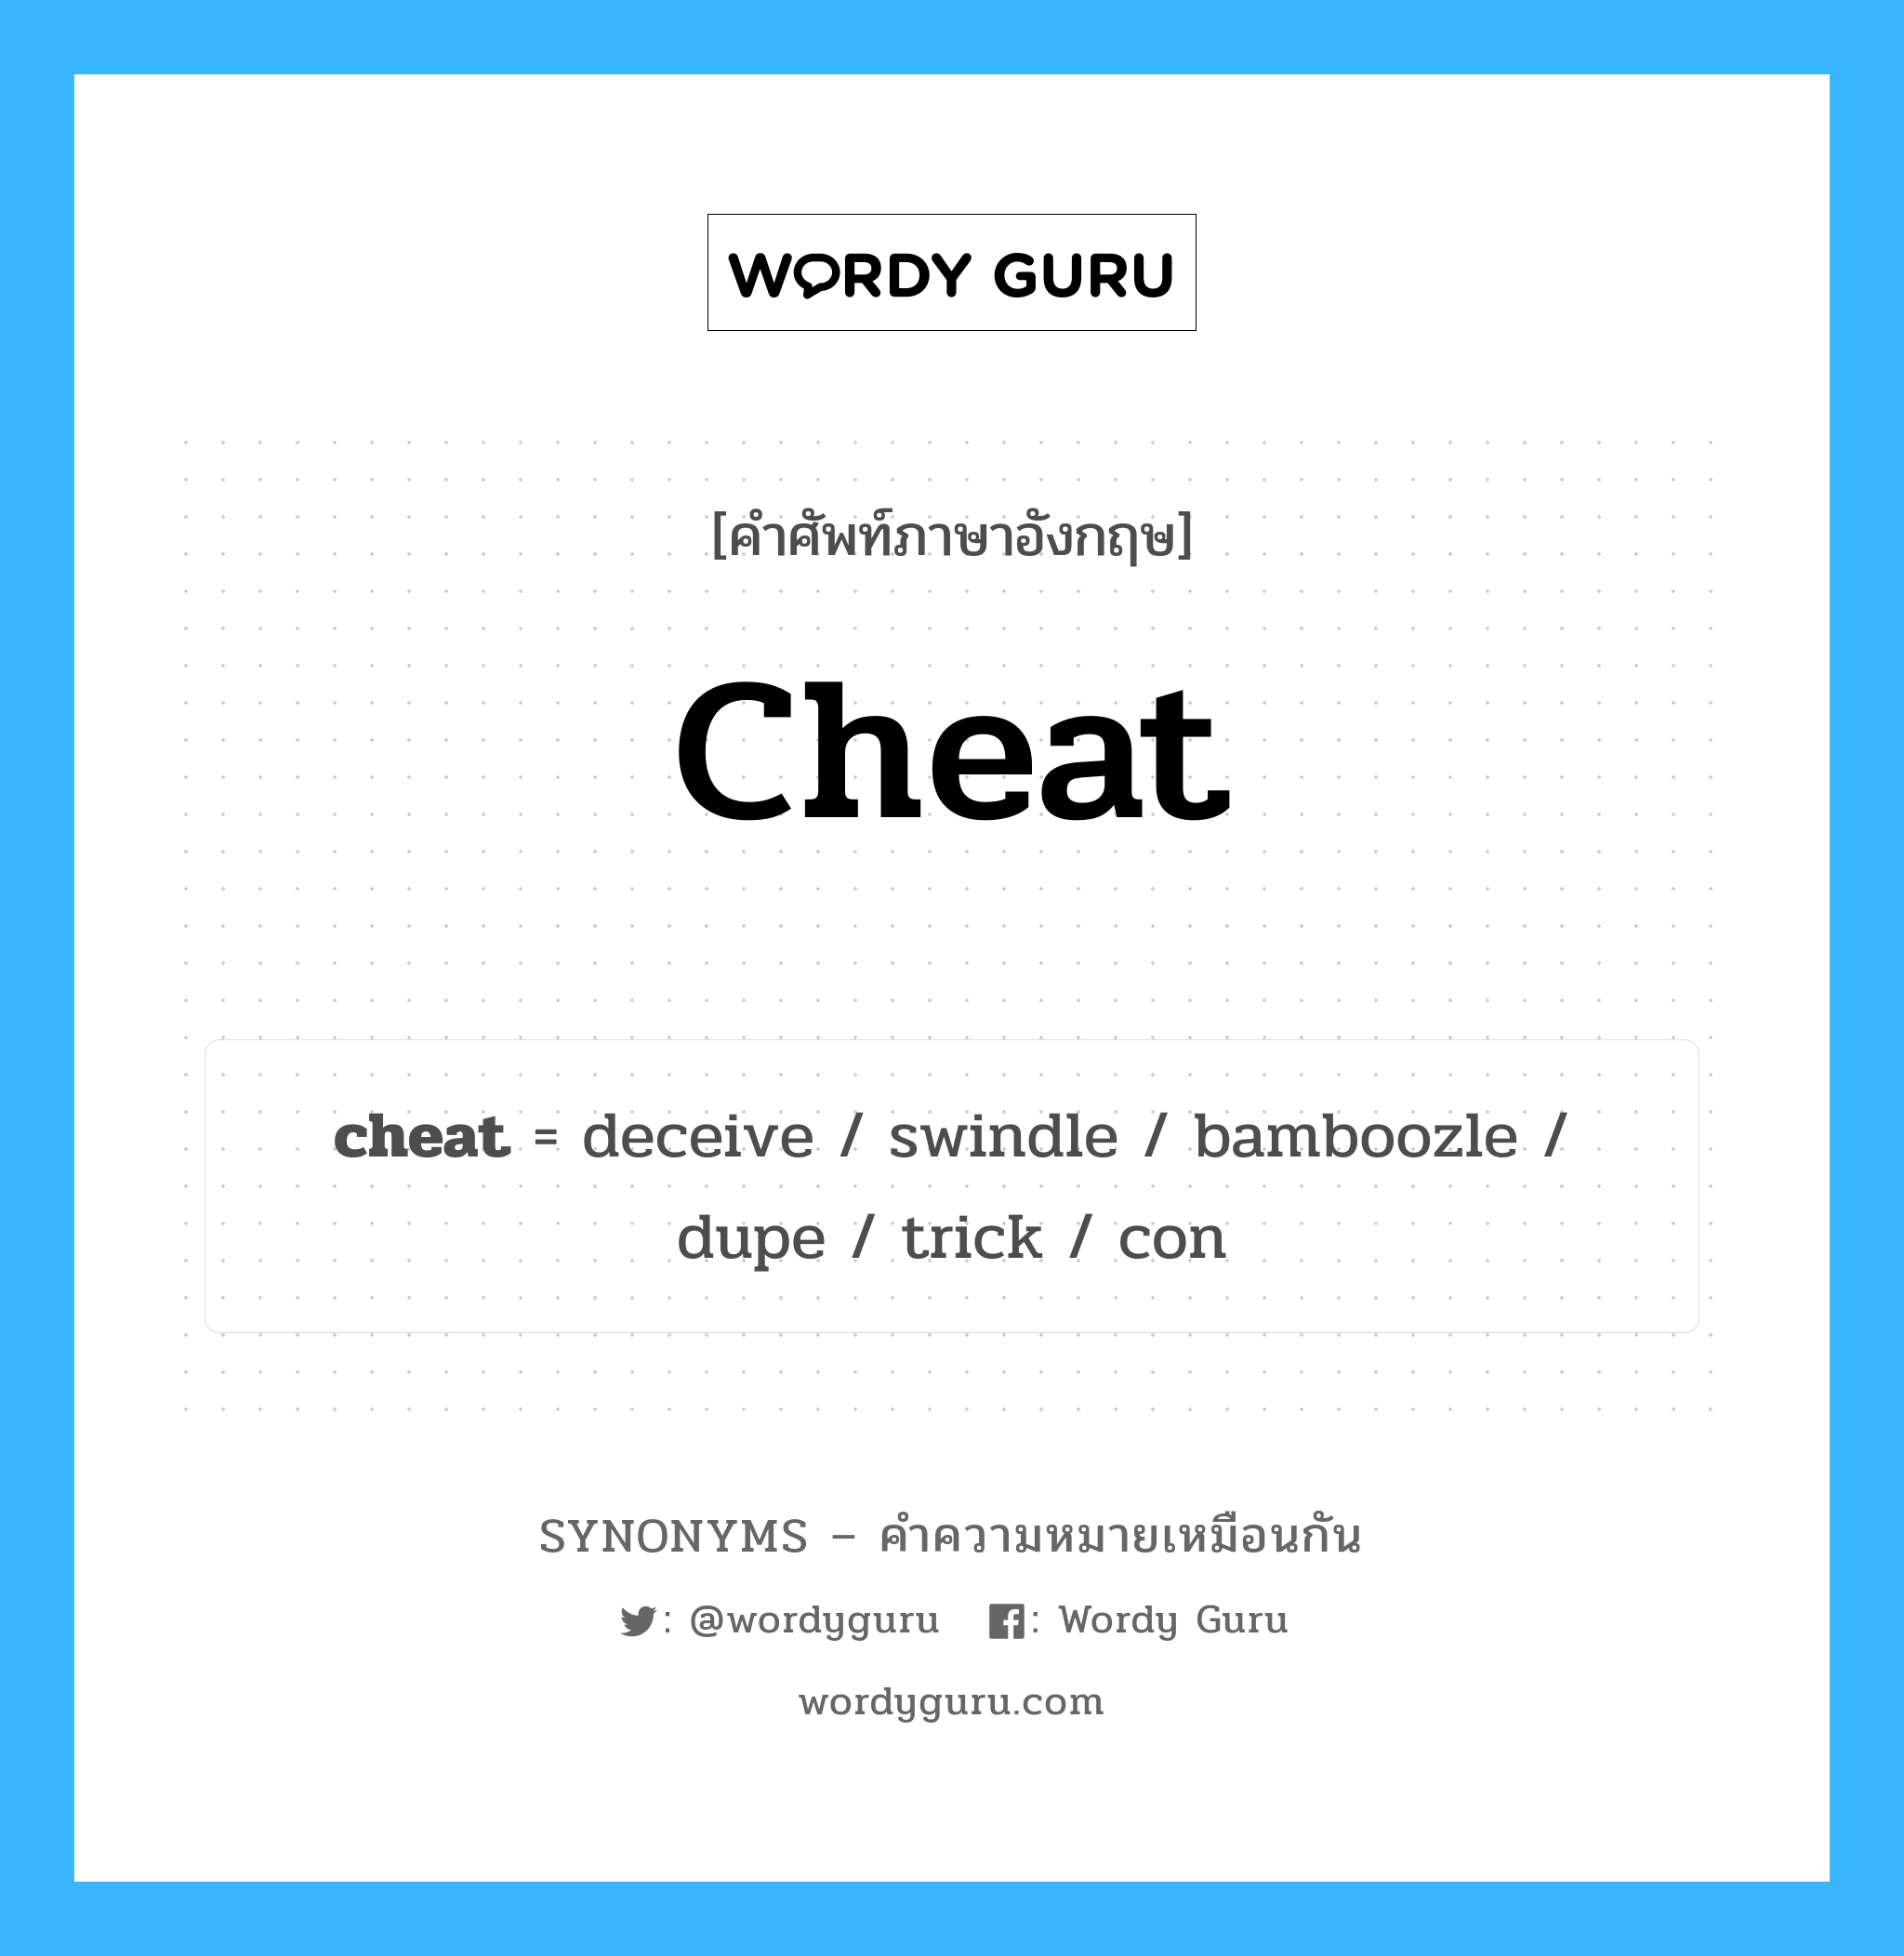 dupe เป็นหนึ่งใน cheat และมีคำอื่น ๆ อีกดังนี้, คำศัพท์ภาษาอังกฤษ dupe ความหมายคล้ายกันกับ cheat แปลว่า ล่อ หมวด cheat